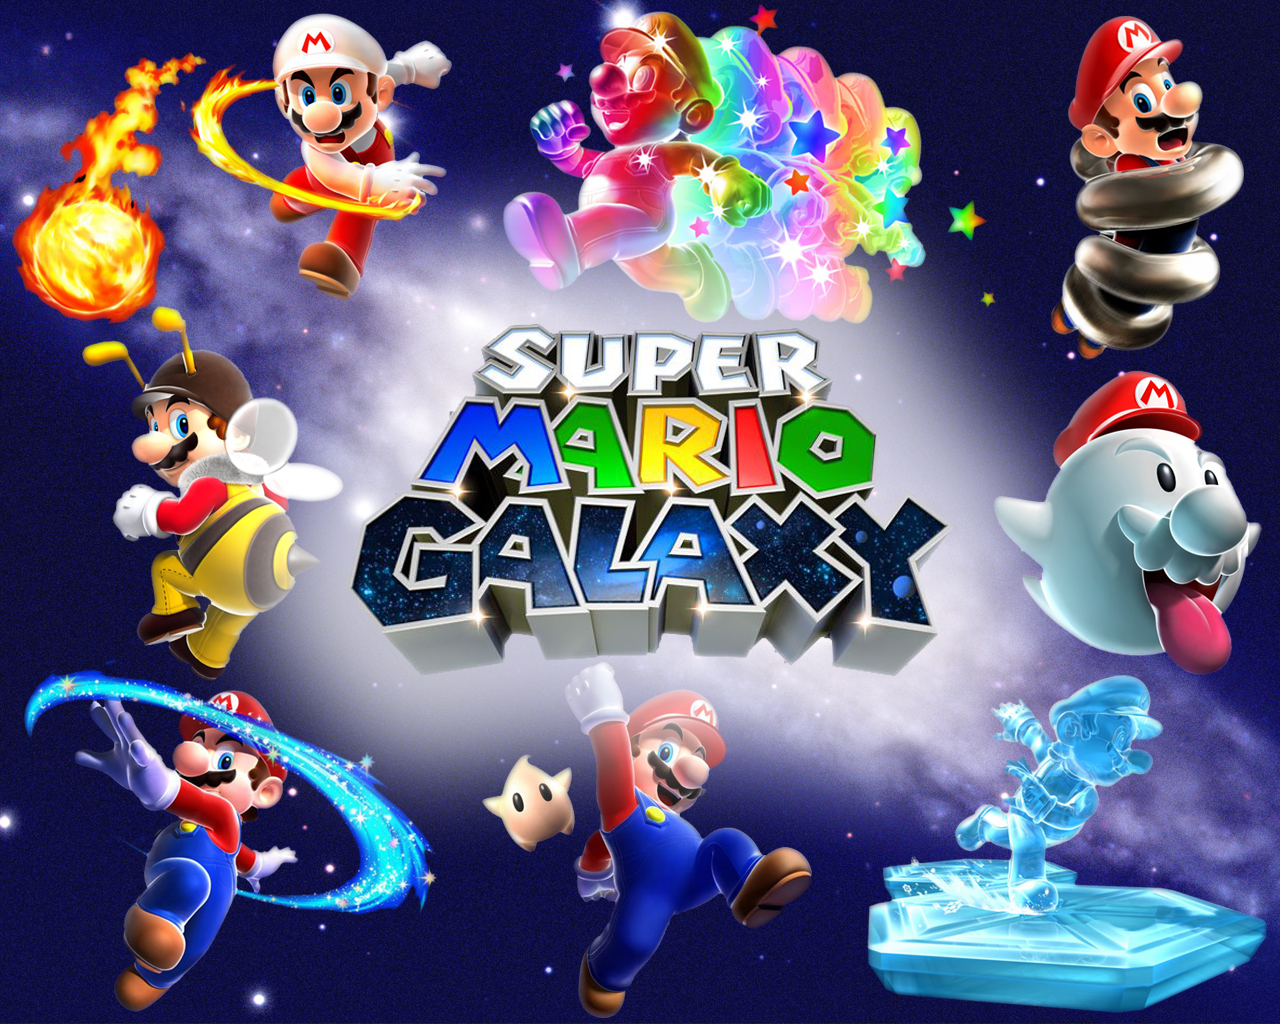 Super Mario Galaxy Wallpaper 1374.41 Kb